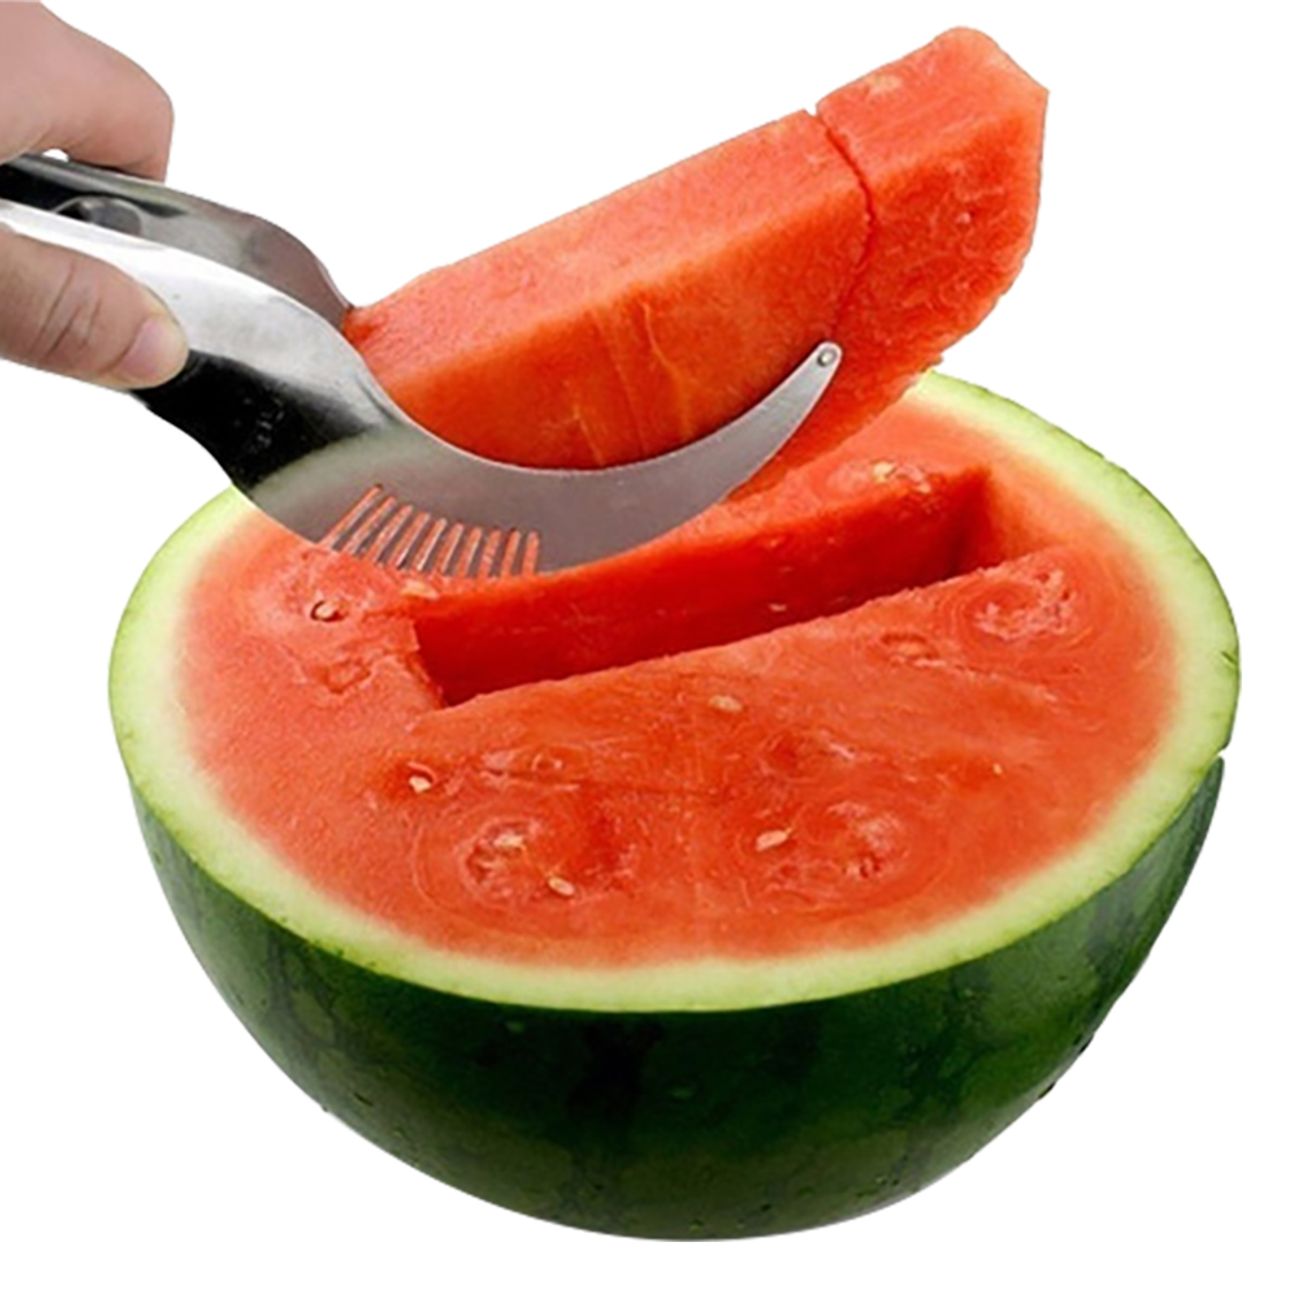 vattenmelon-slicer-82702-3